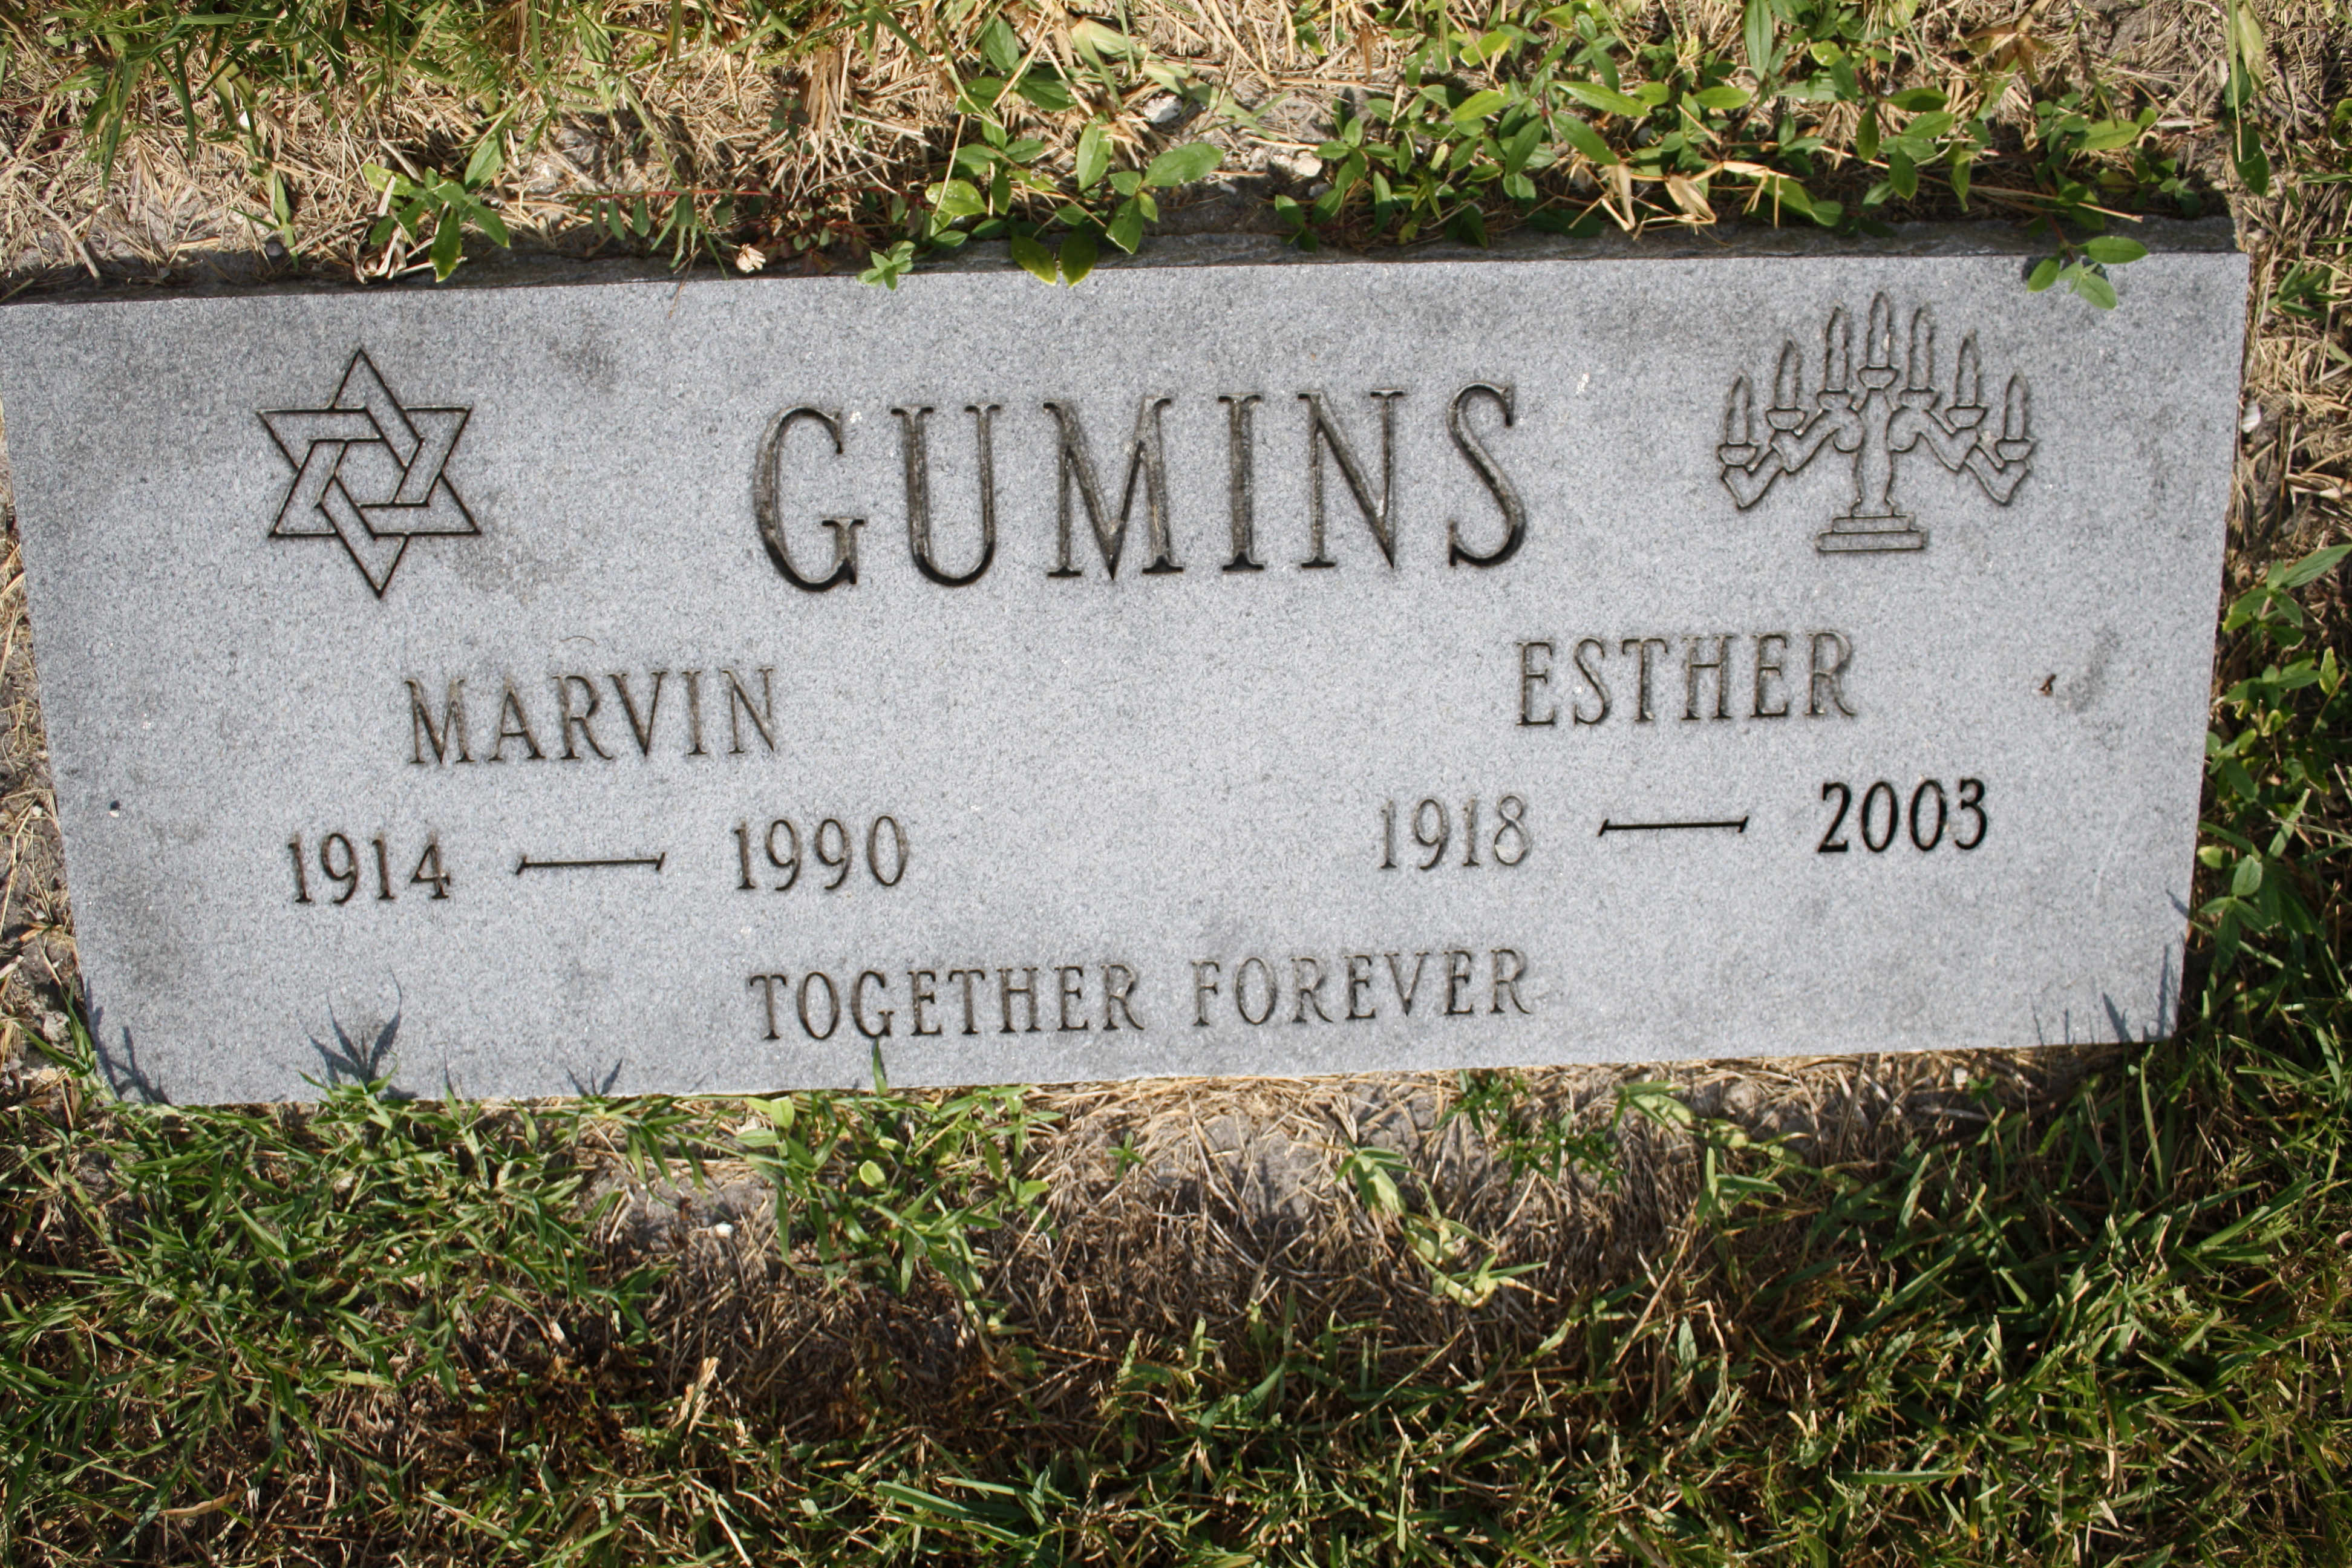 Marvin Gumins